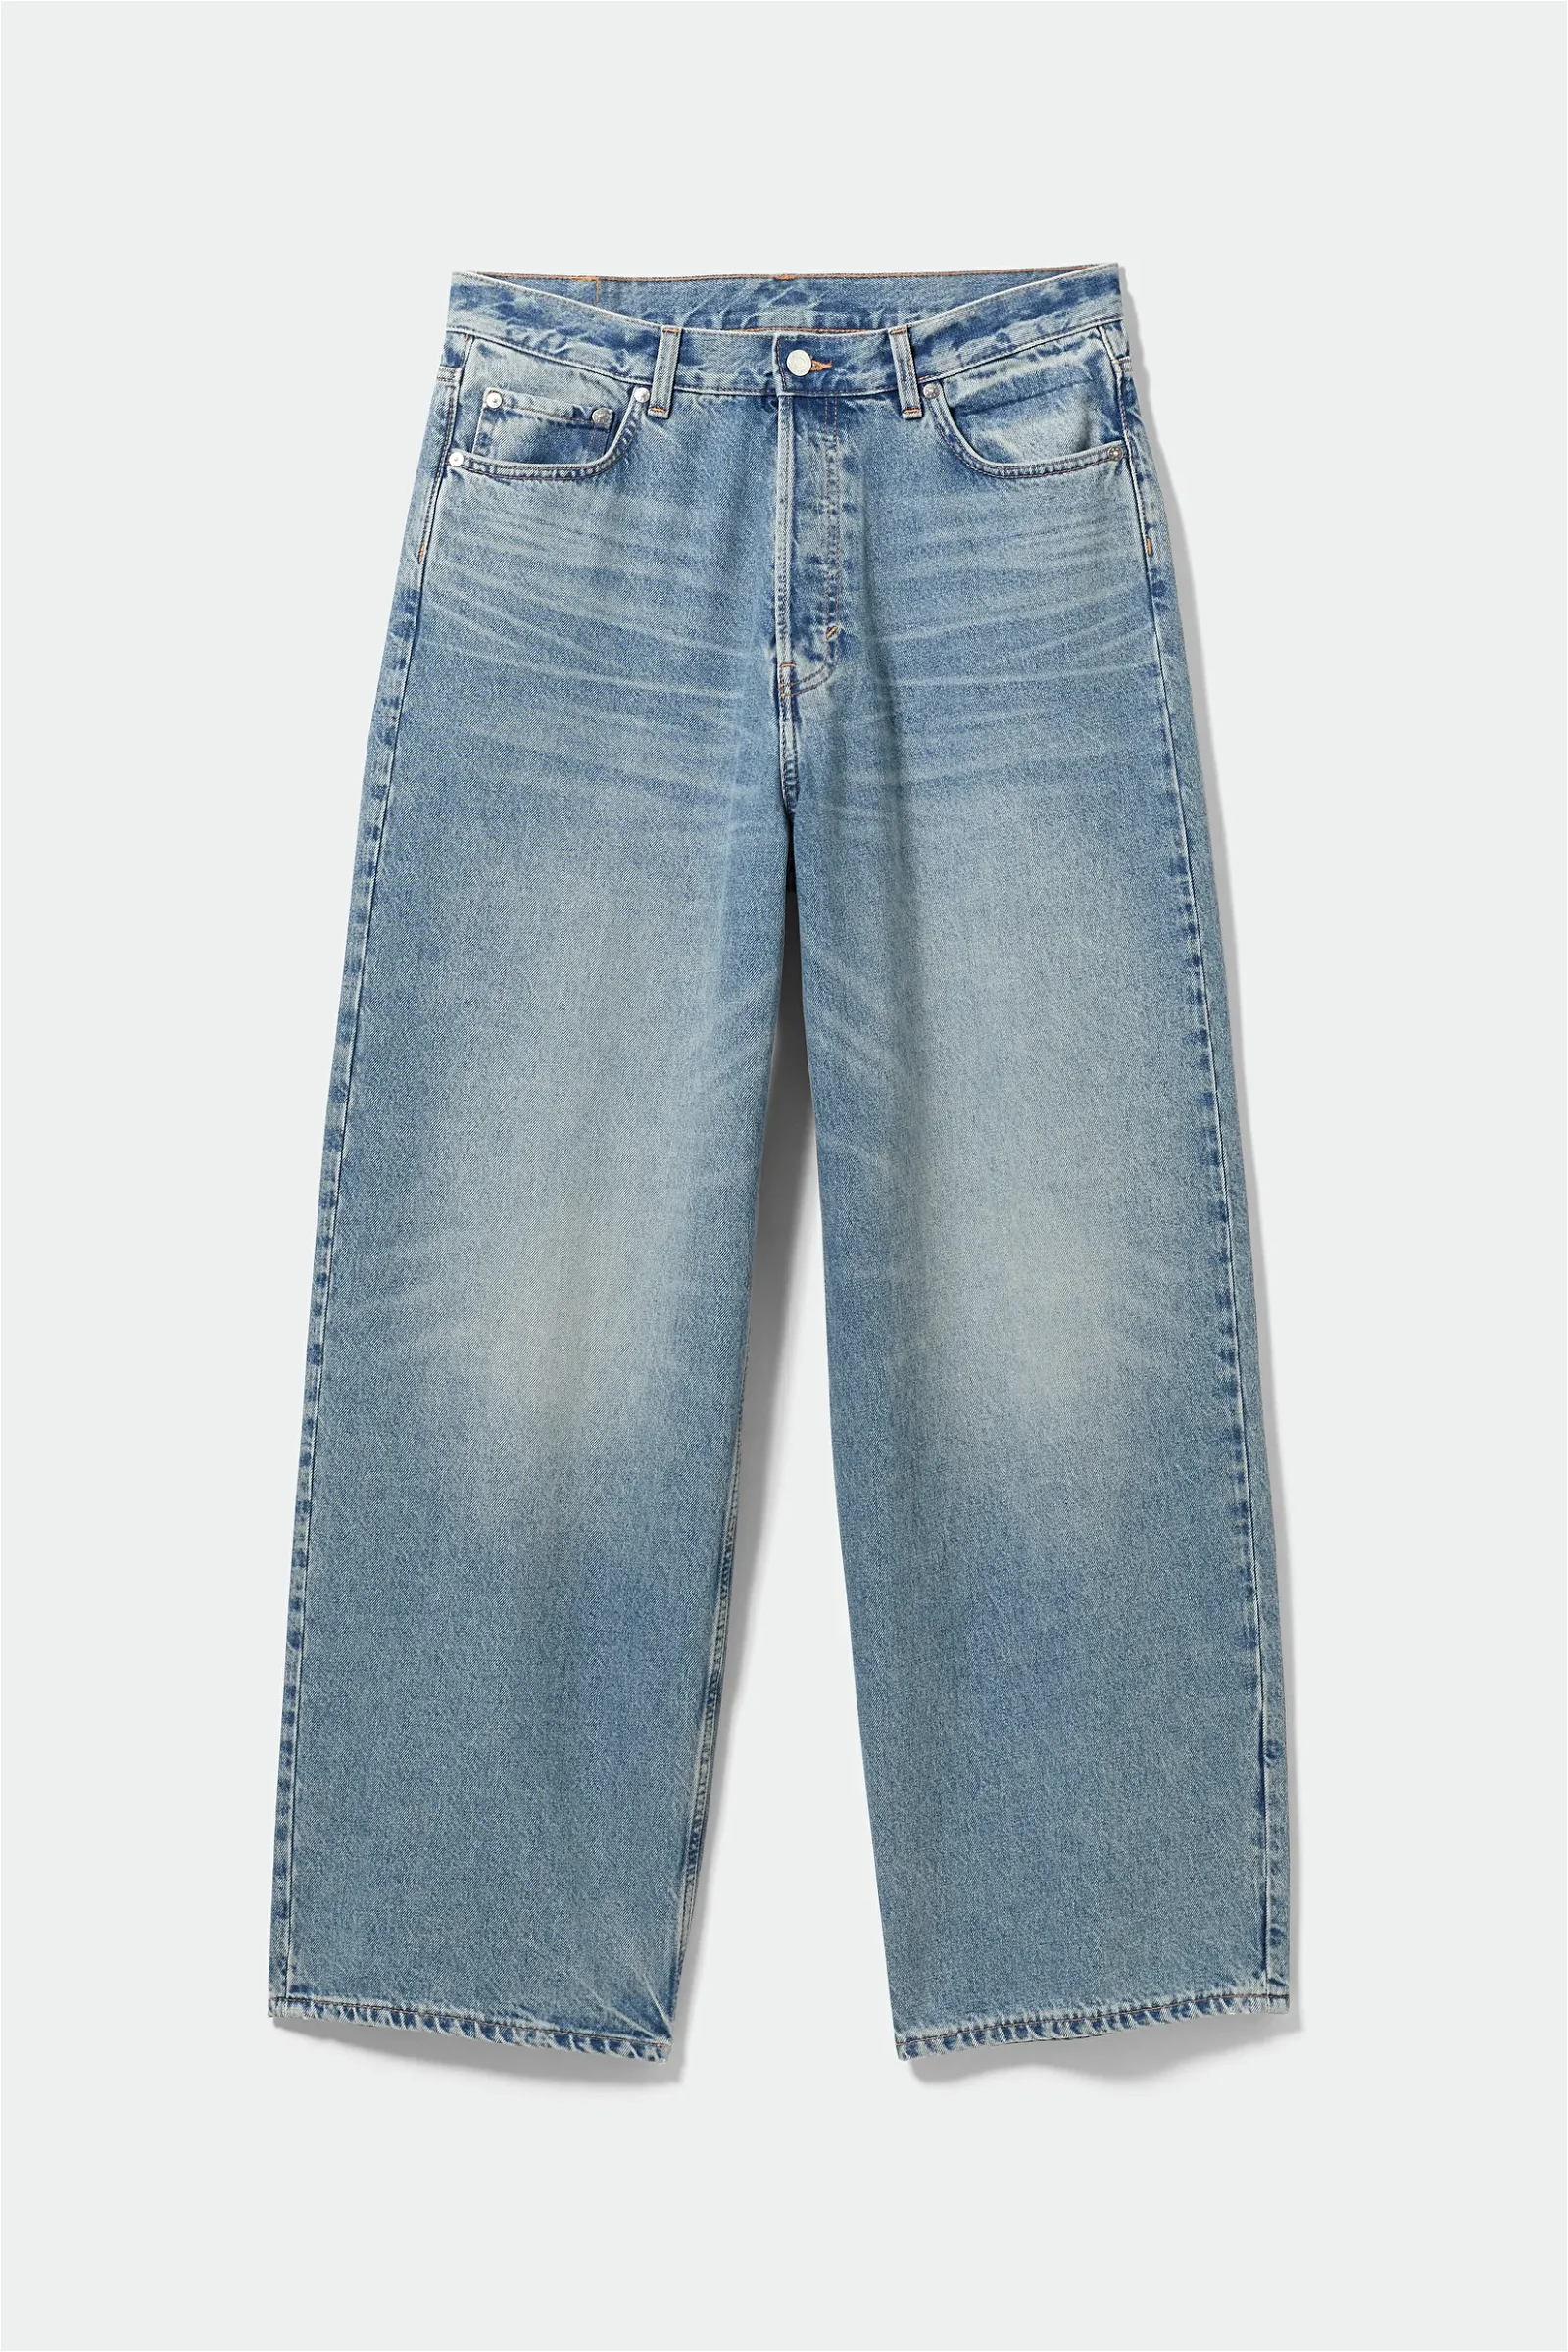 WEEKDAY Astro Loose Baggy Jeans in Seventeen blue | Endource